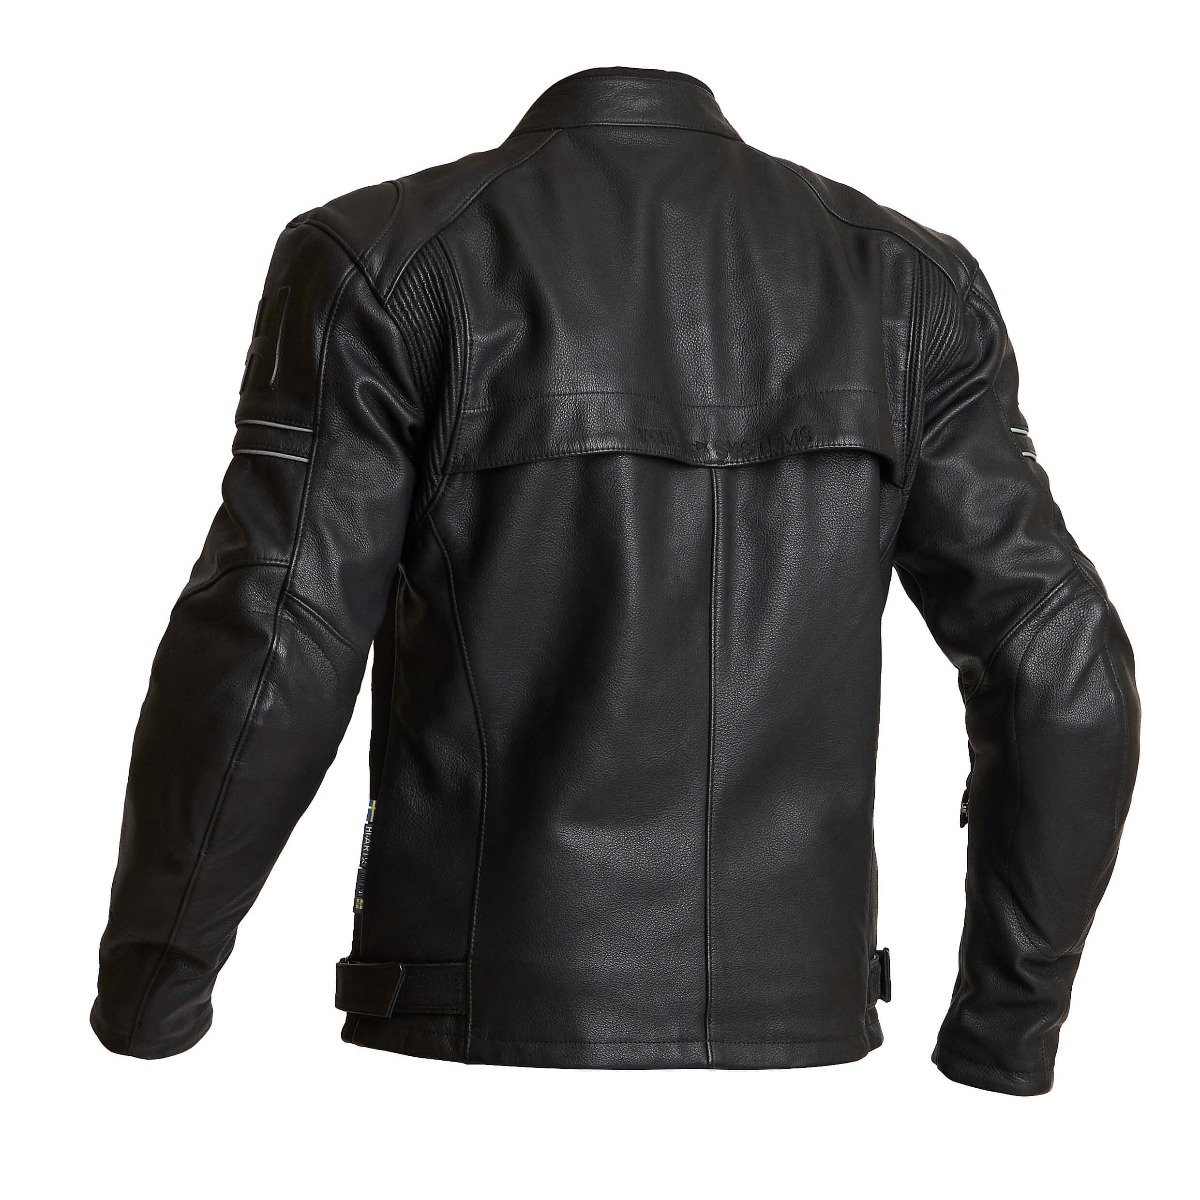 Image of Halvarssons Selja Jacket Black Size 56 EN